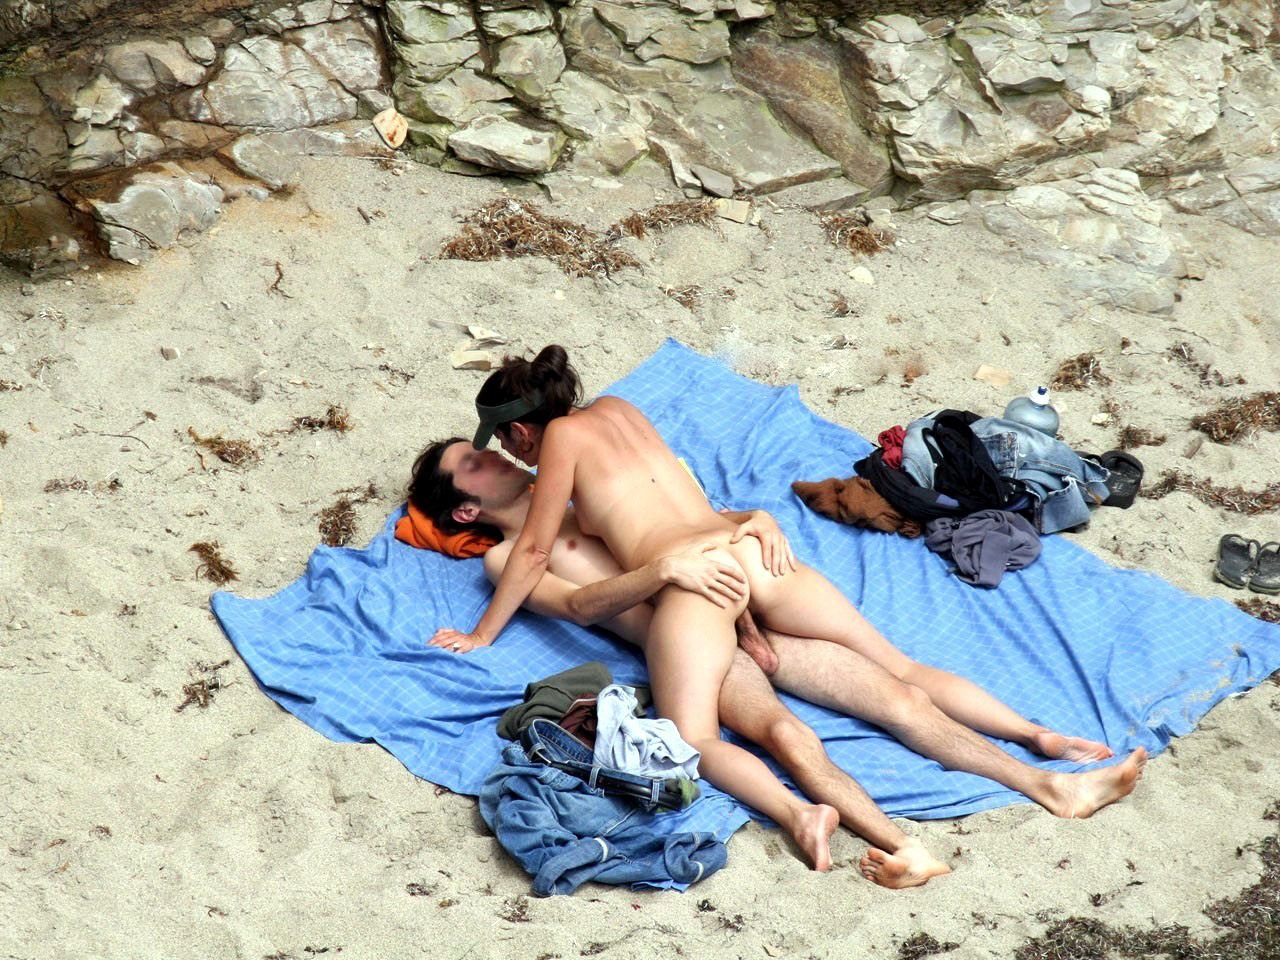 Hidden camera on the nudist beach pic pic